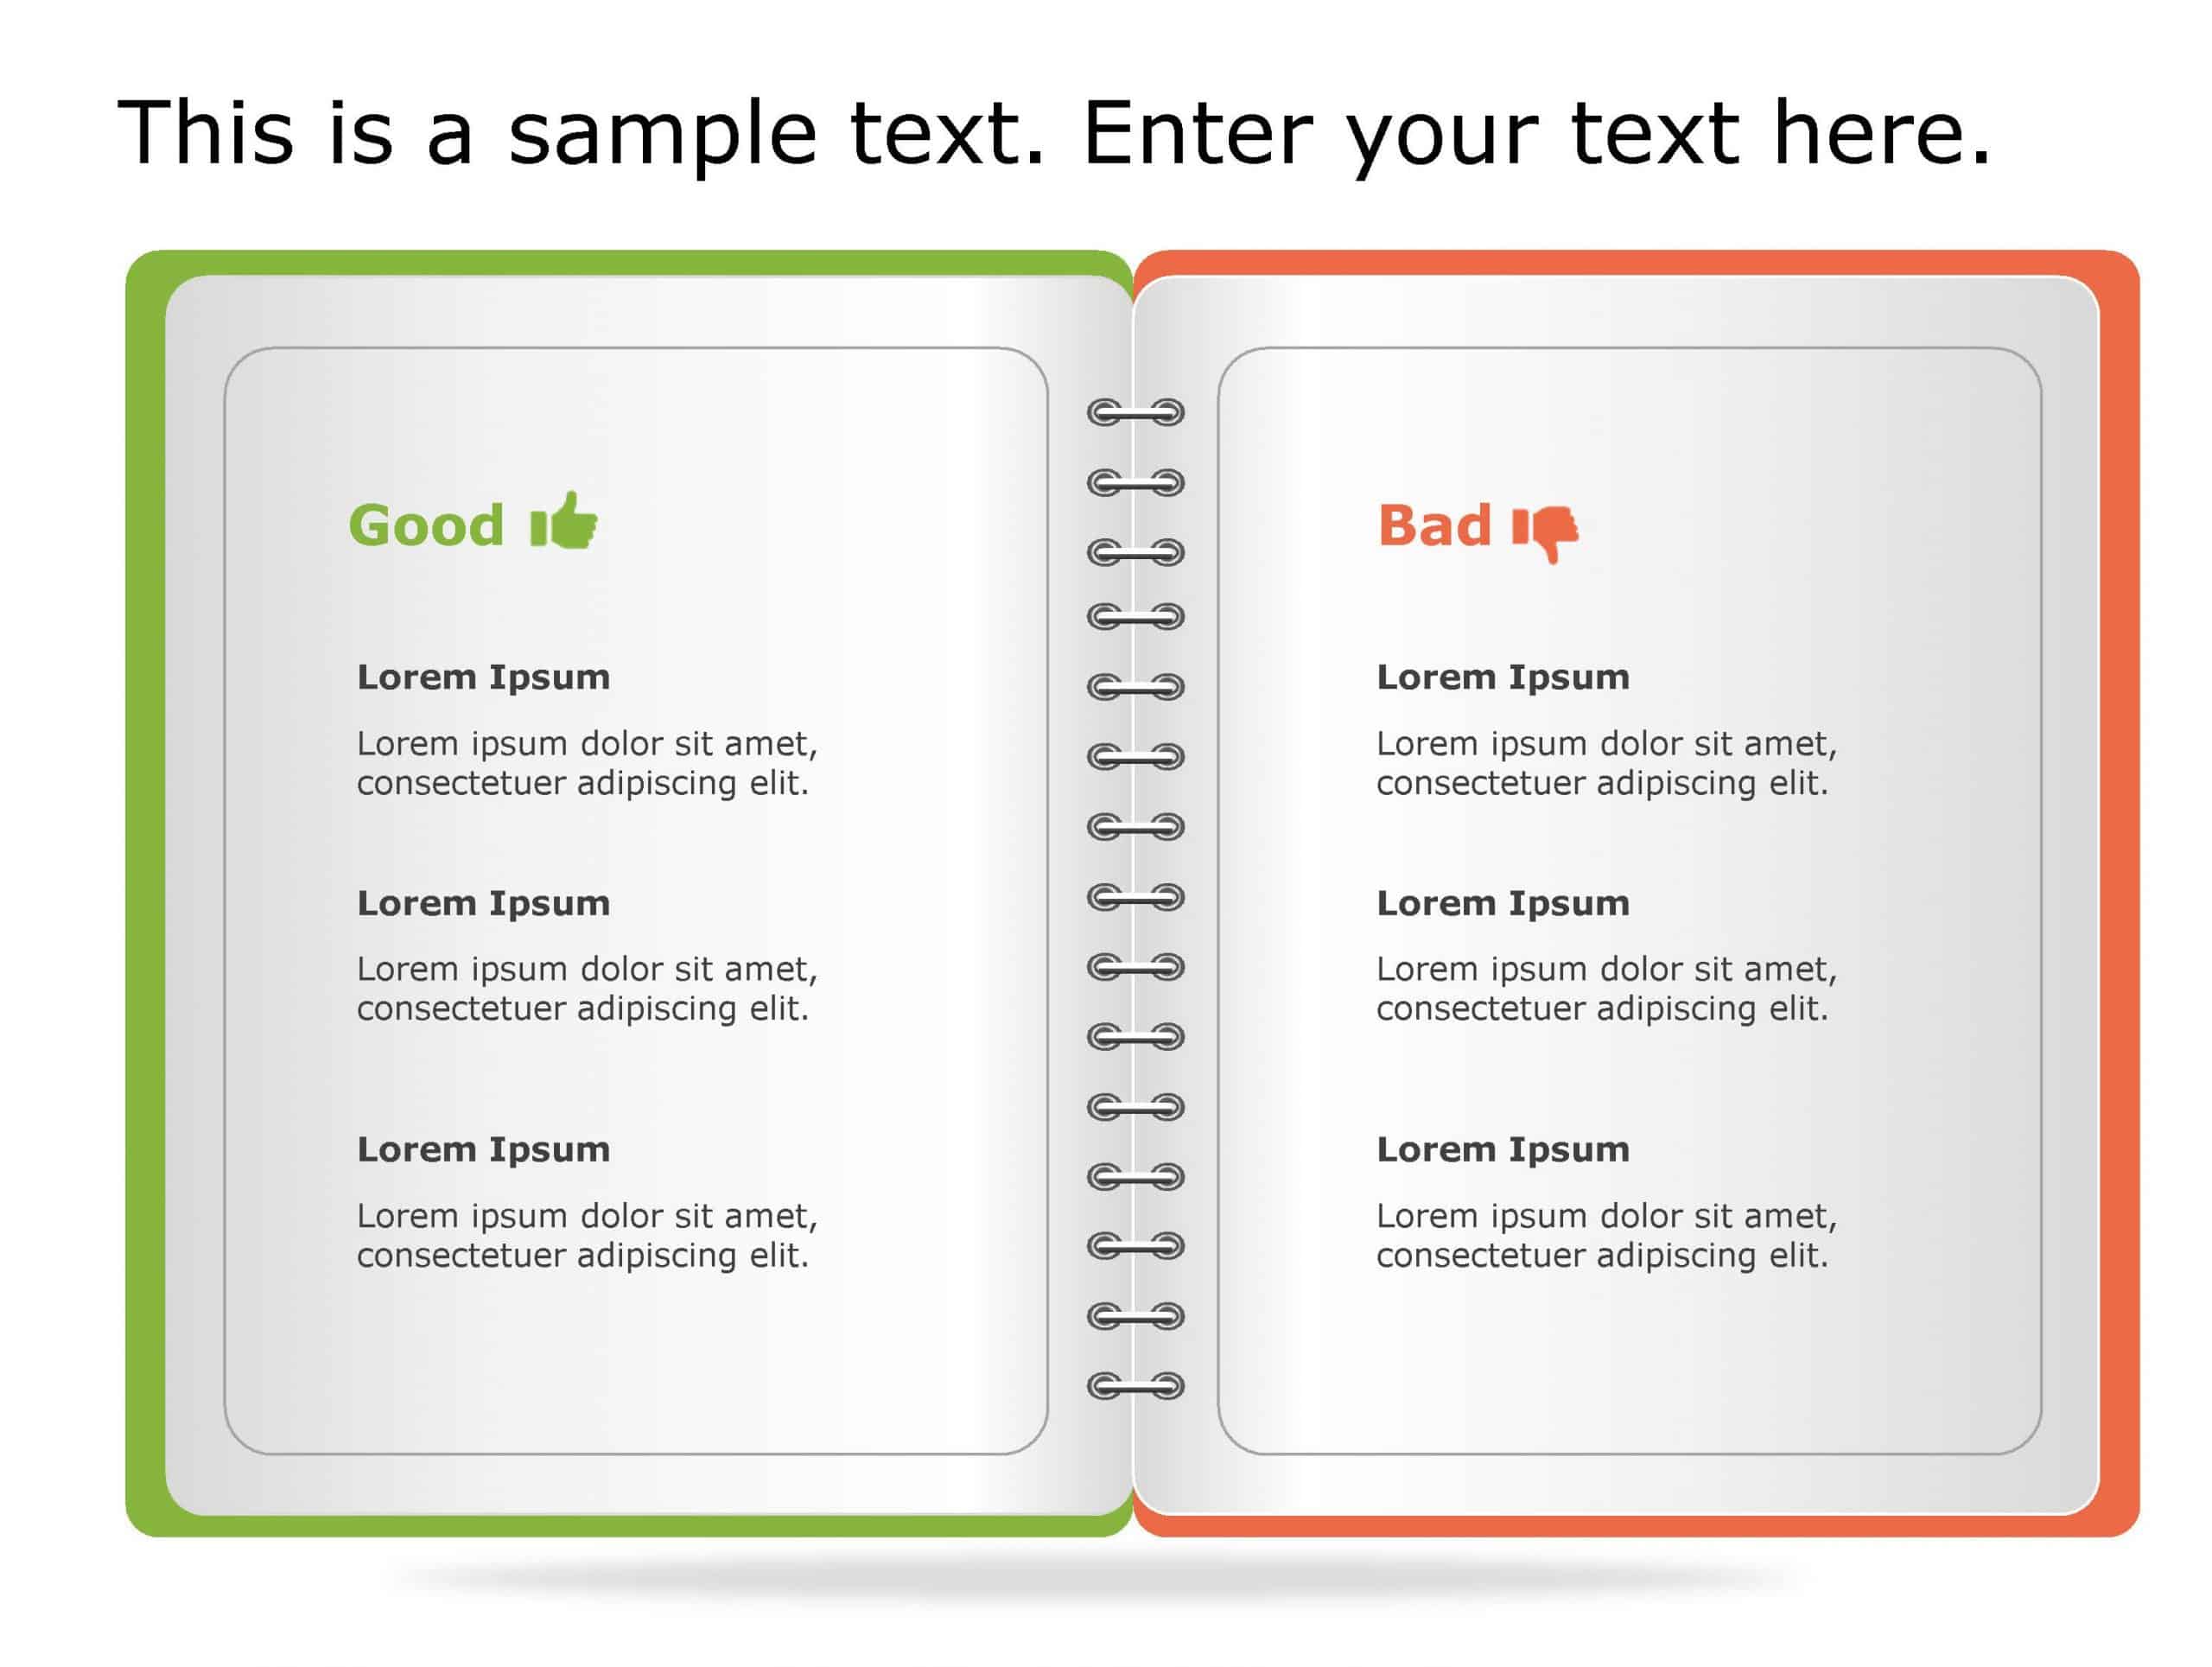 Good Bad 53 PowerPoint Template & Google Slides Theme